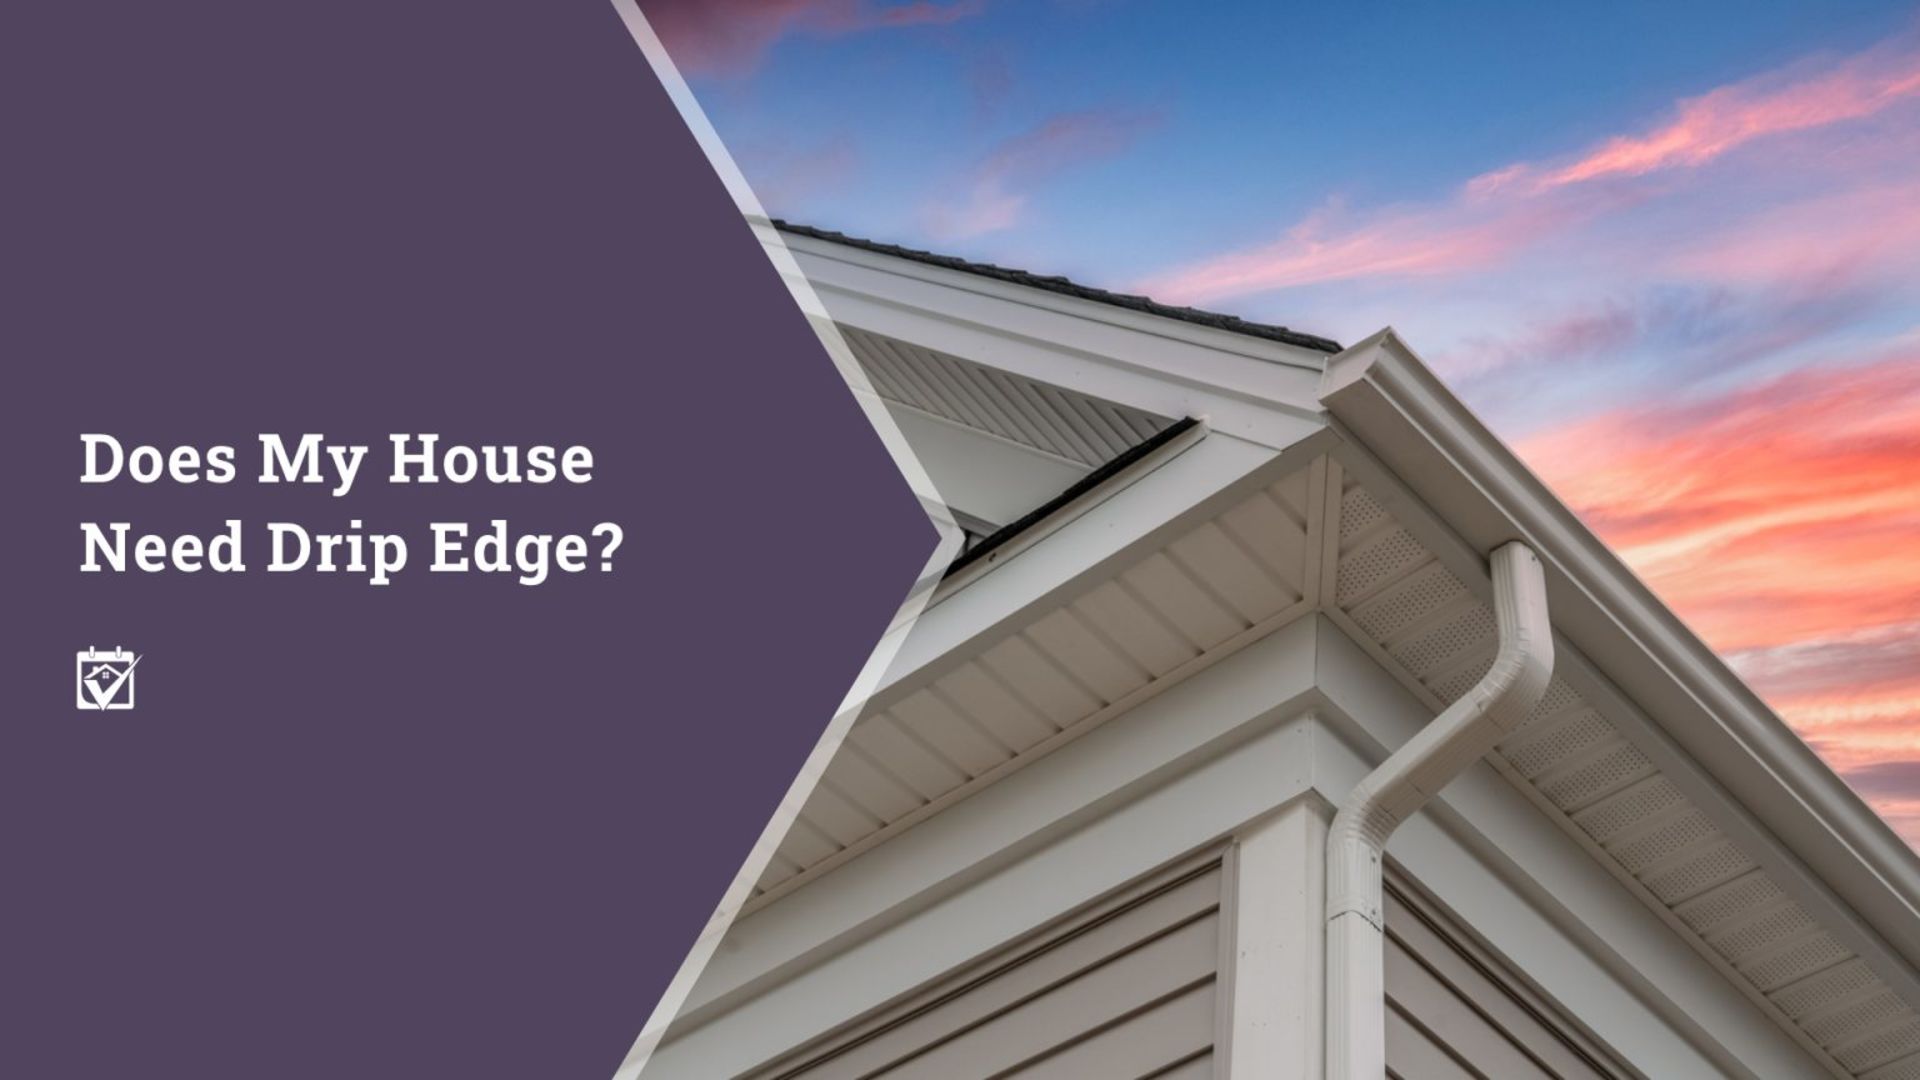 Does My House Need Drip Edge?